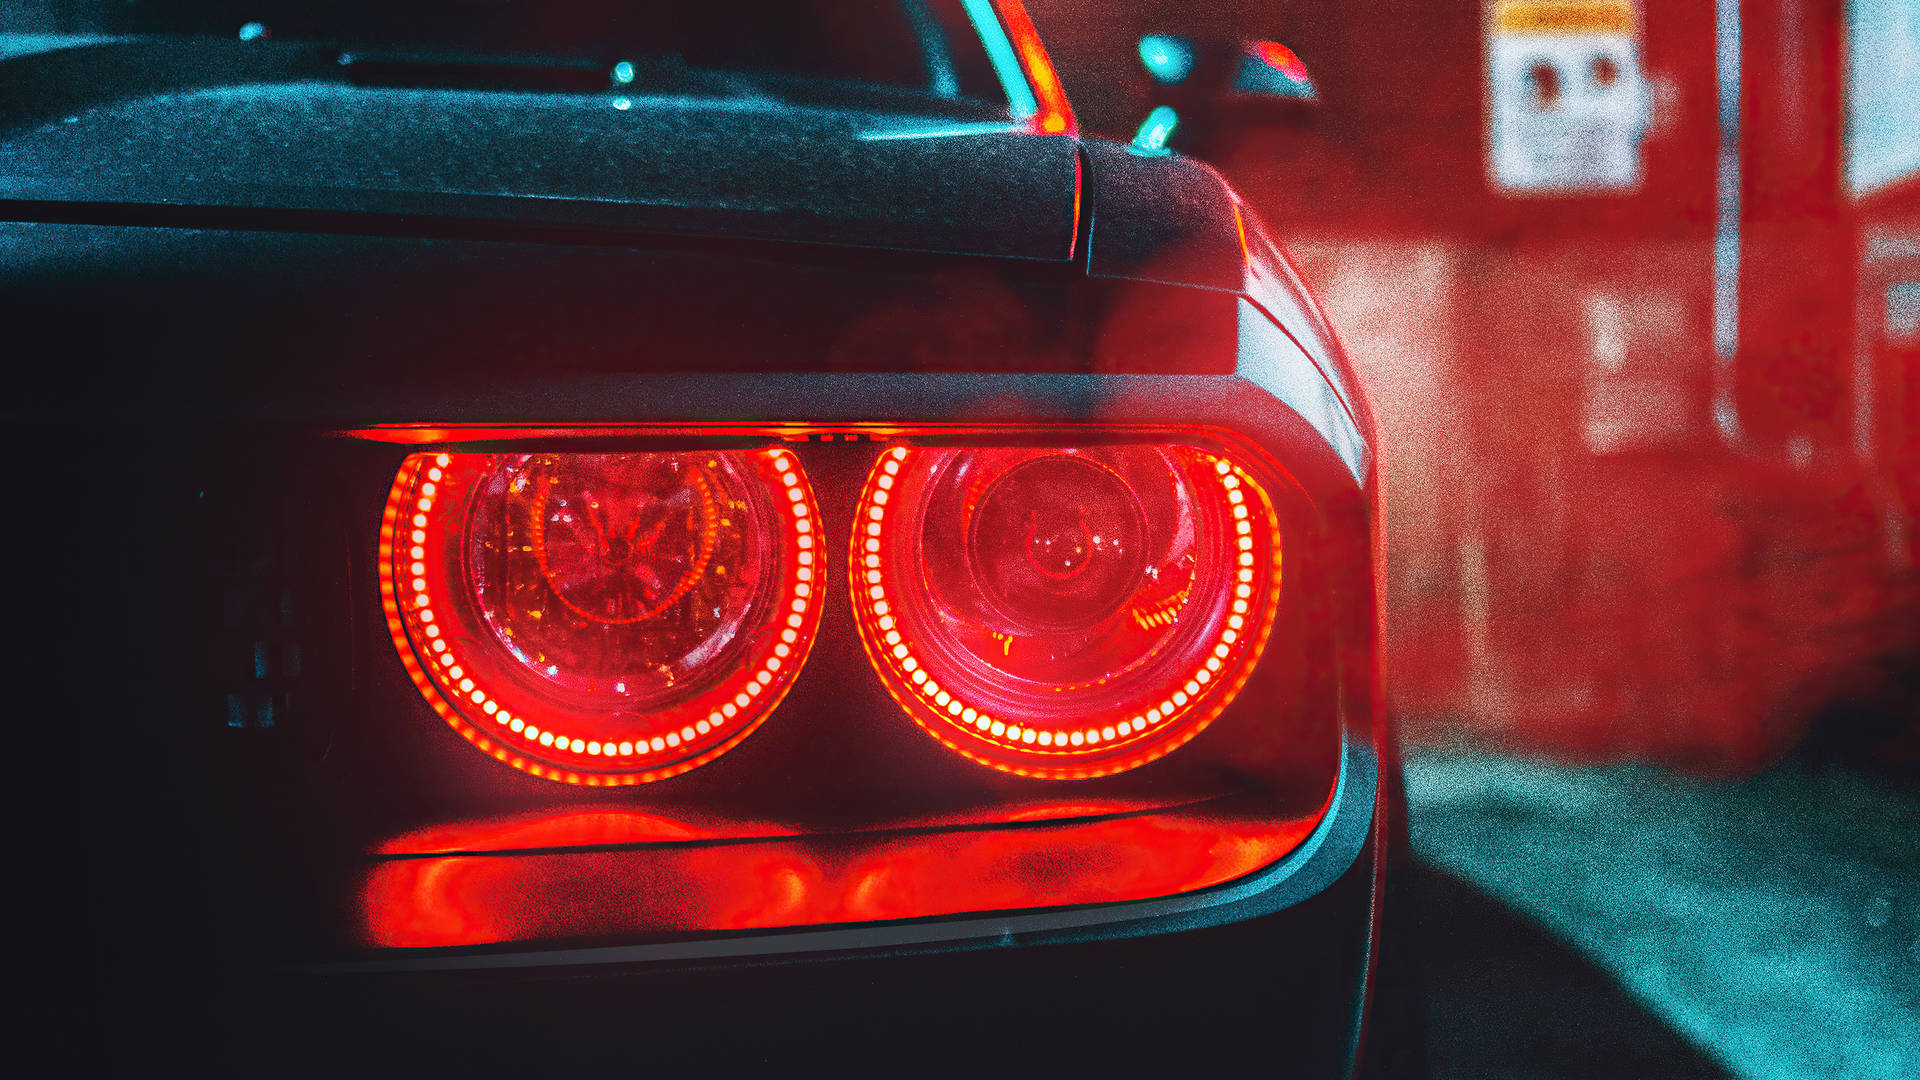 Power and Elegance - Black Dodge Challenger Demon 4K with striking red tail lights. Wallpaper